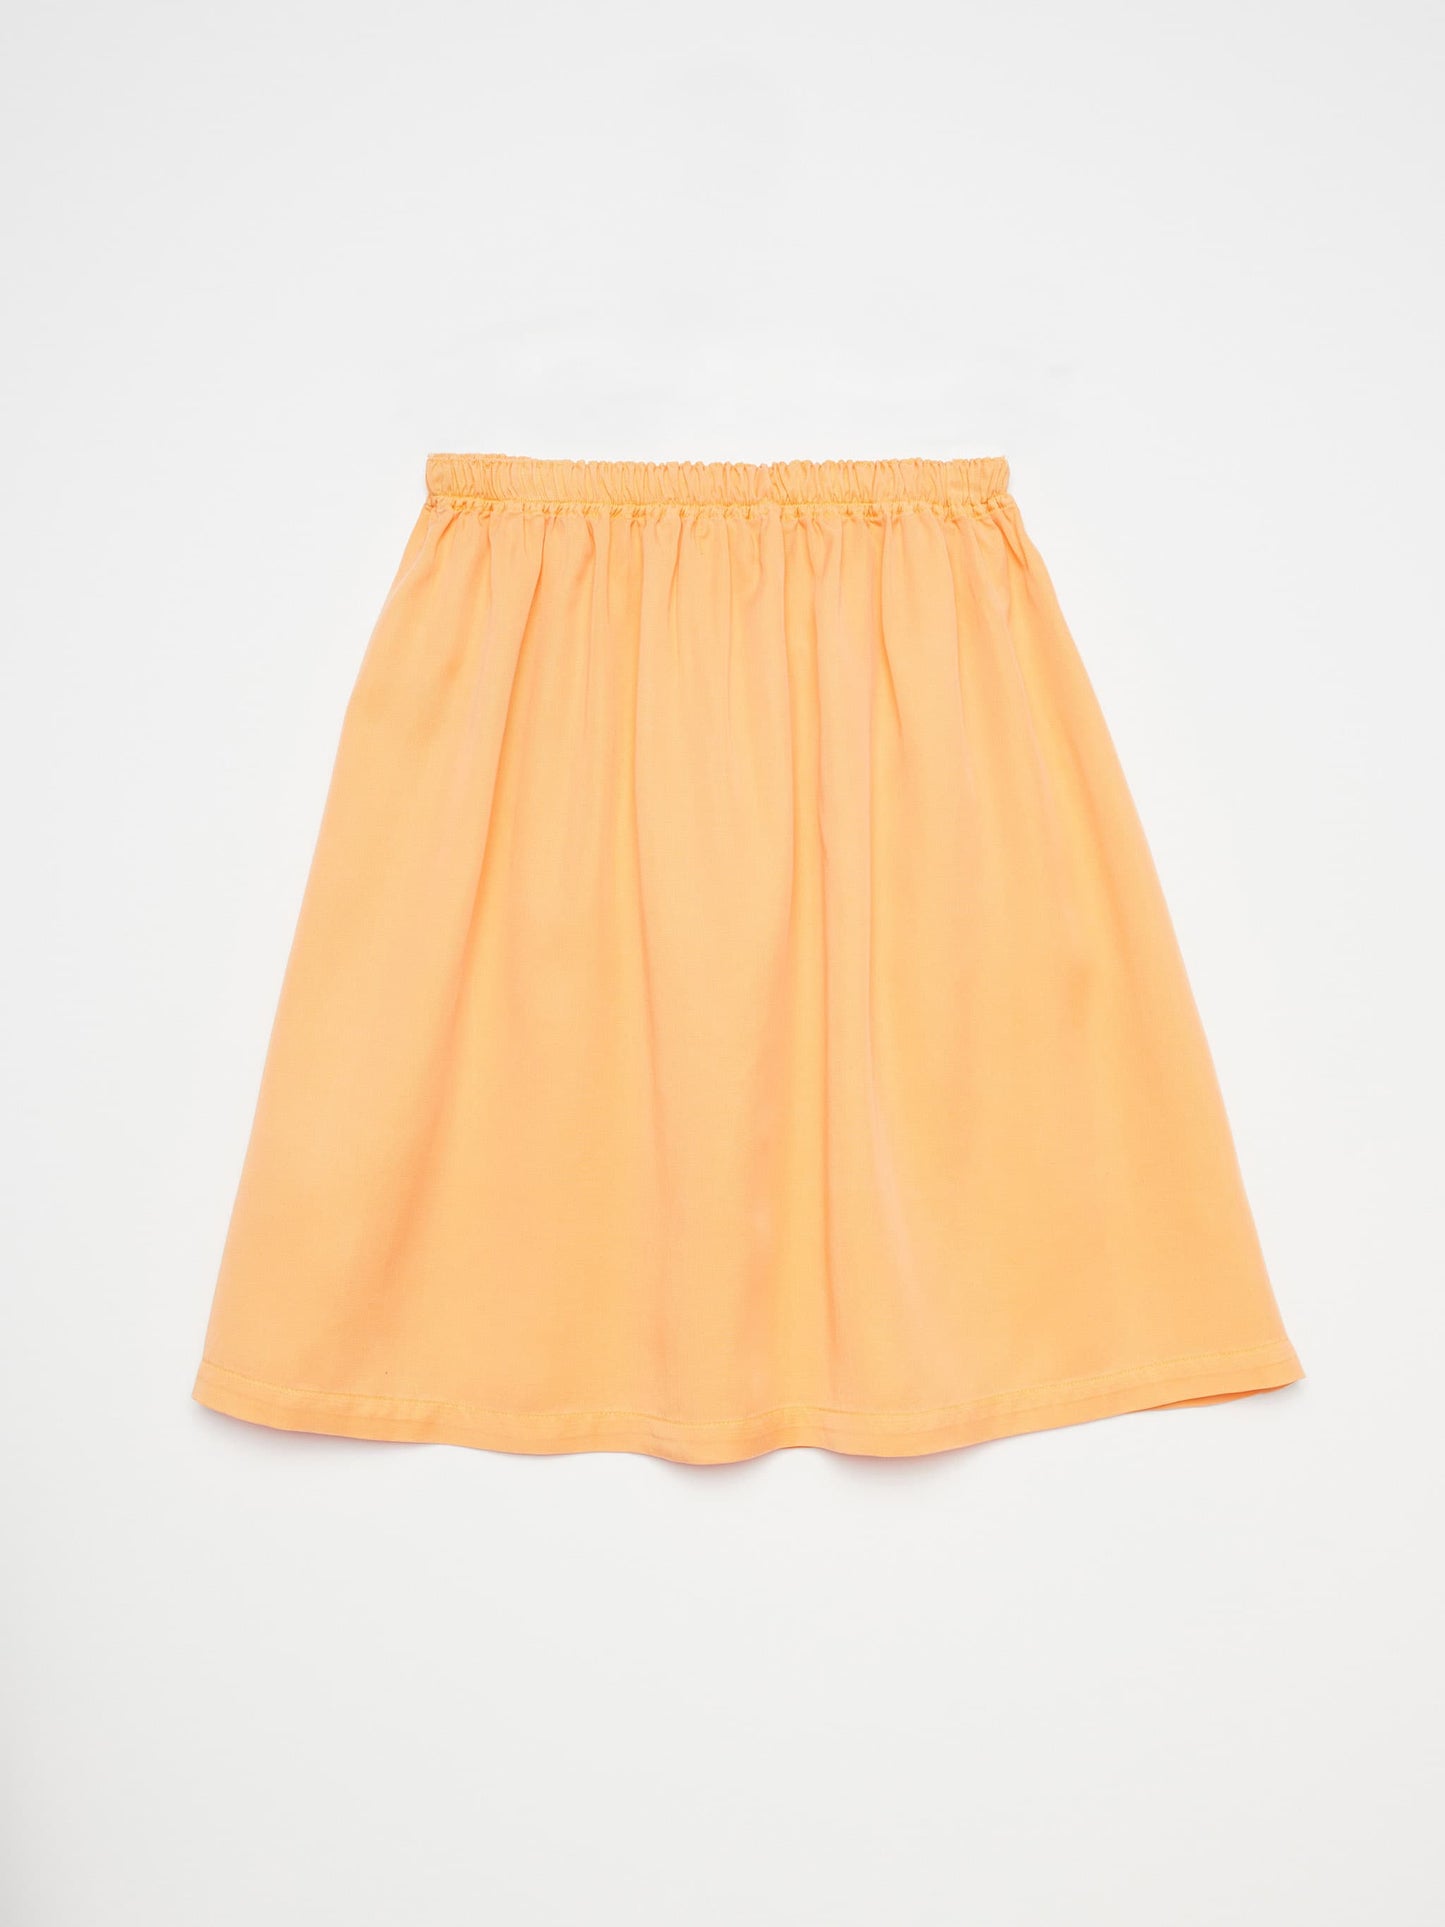 Skirt nº03 Orange Melon